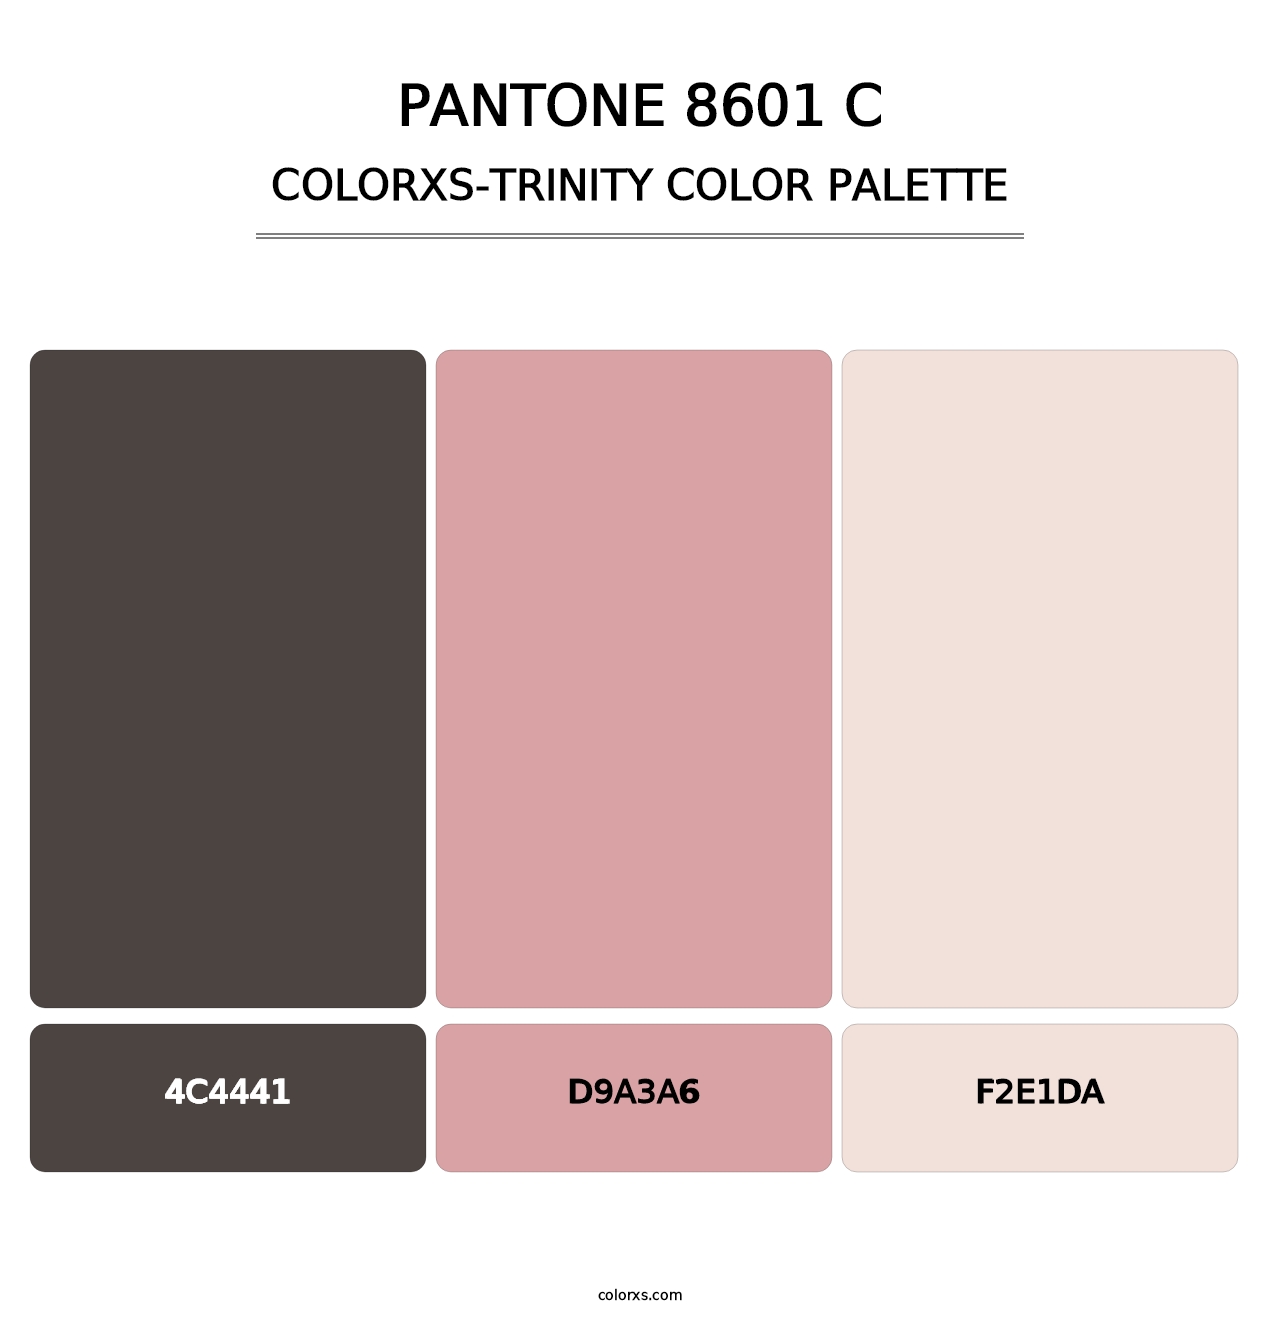 PANTONE 8601 C - Colorxs Trinity Palette